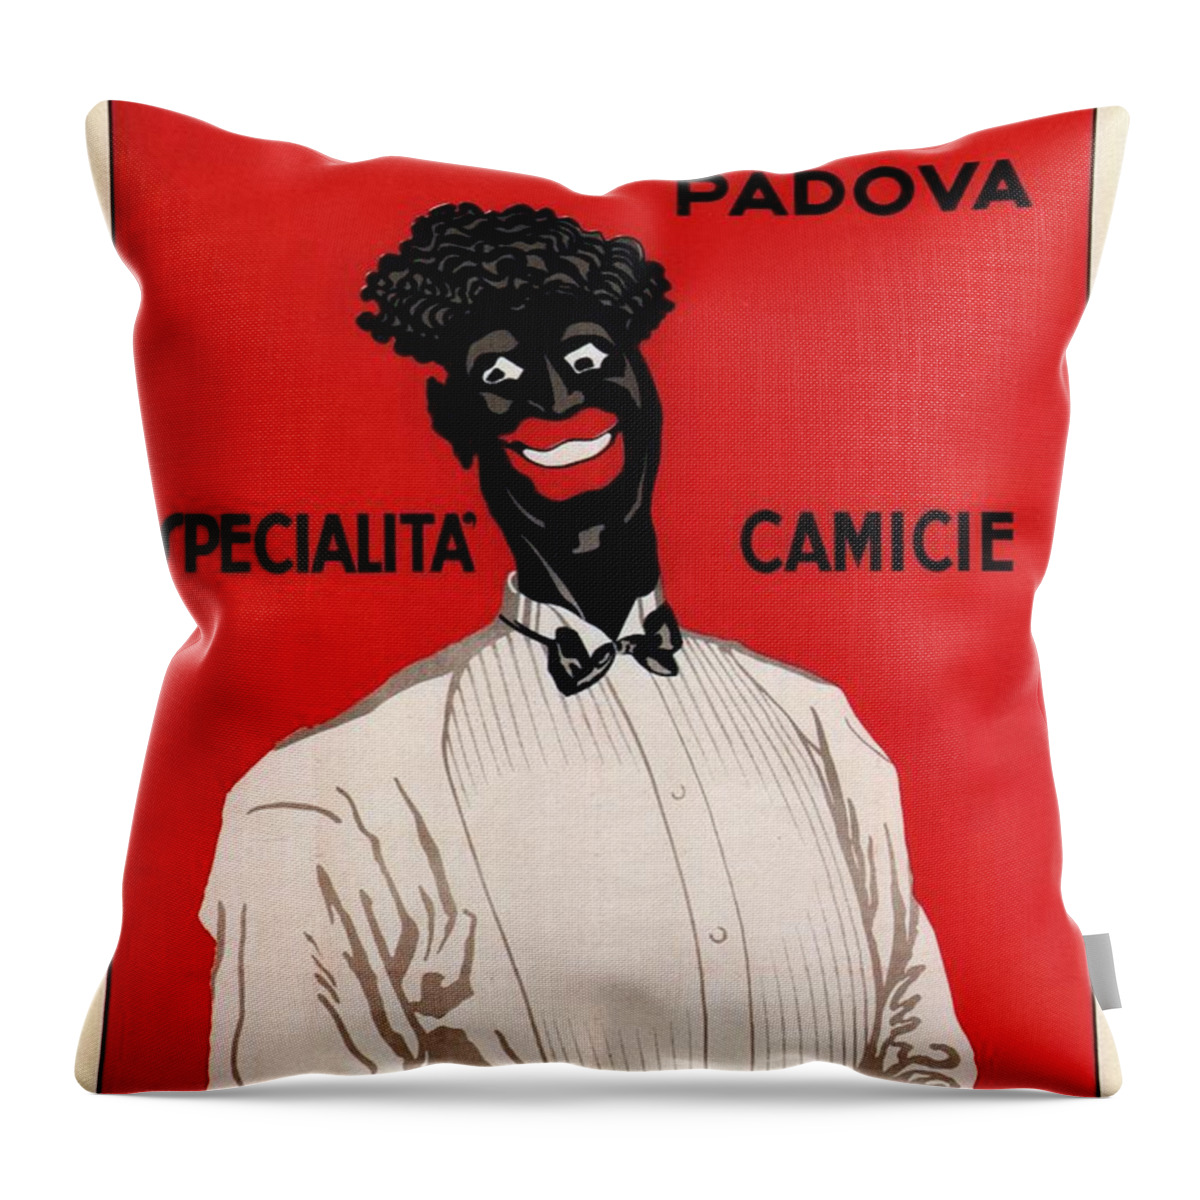 V Bonaldi Throw Pillow featuring the mixed media V Bonaldi, Padova - Specialita Camicie - Vintage Italian Fashion Advertising Poster by Studio Grafiikka